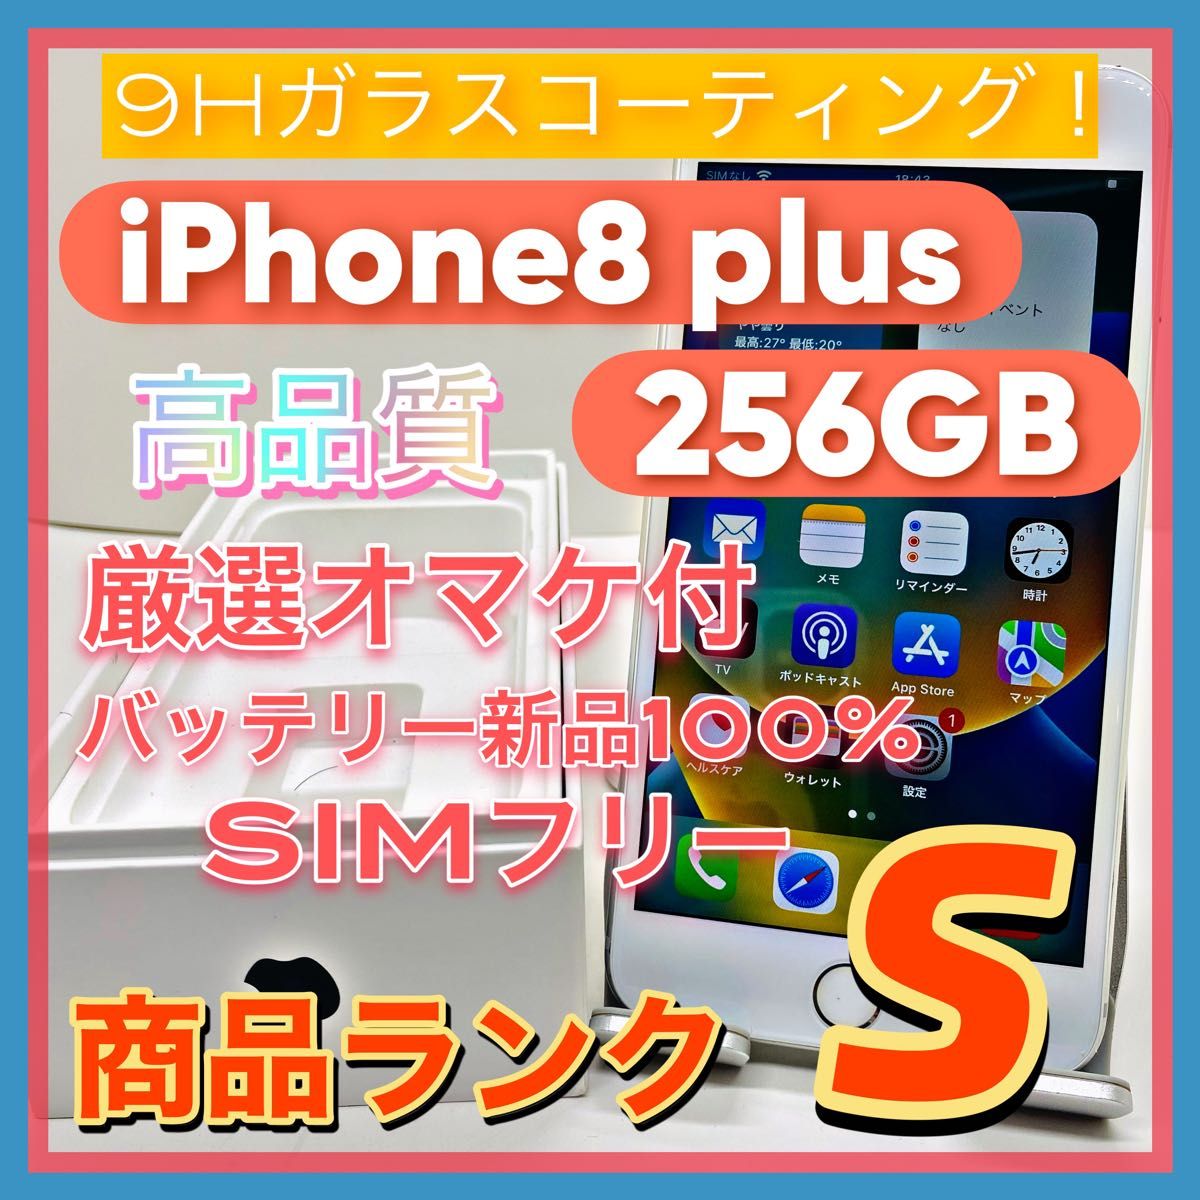 【豪華特典】iPhone8 plus 256GB SIMフリー